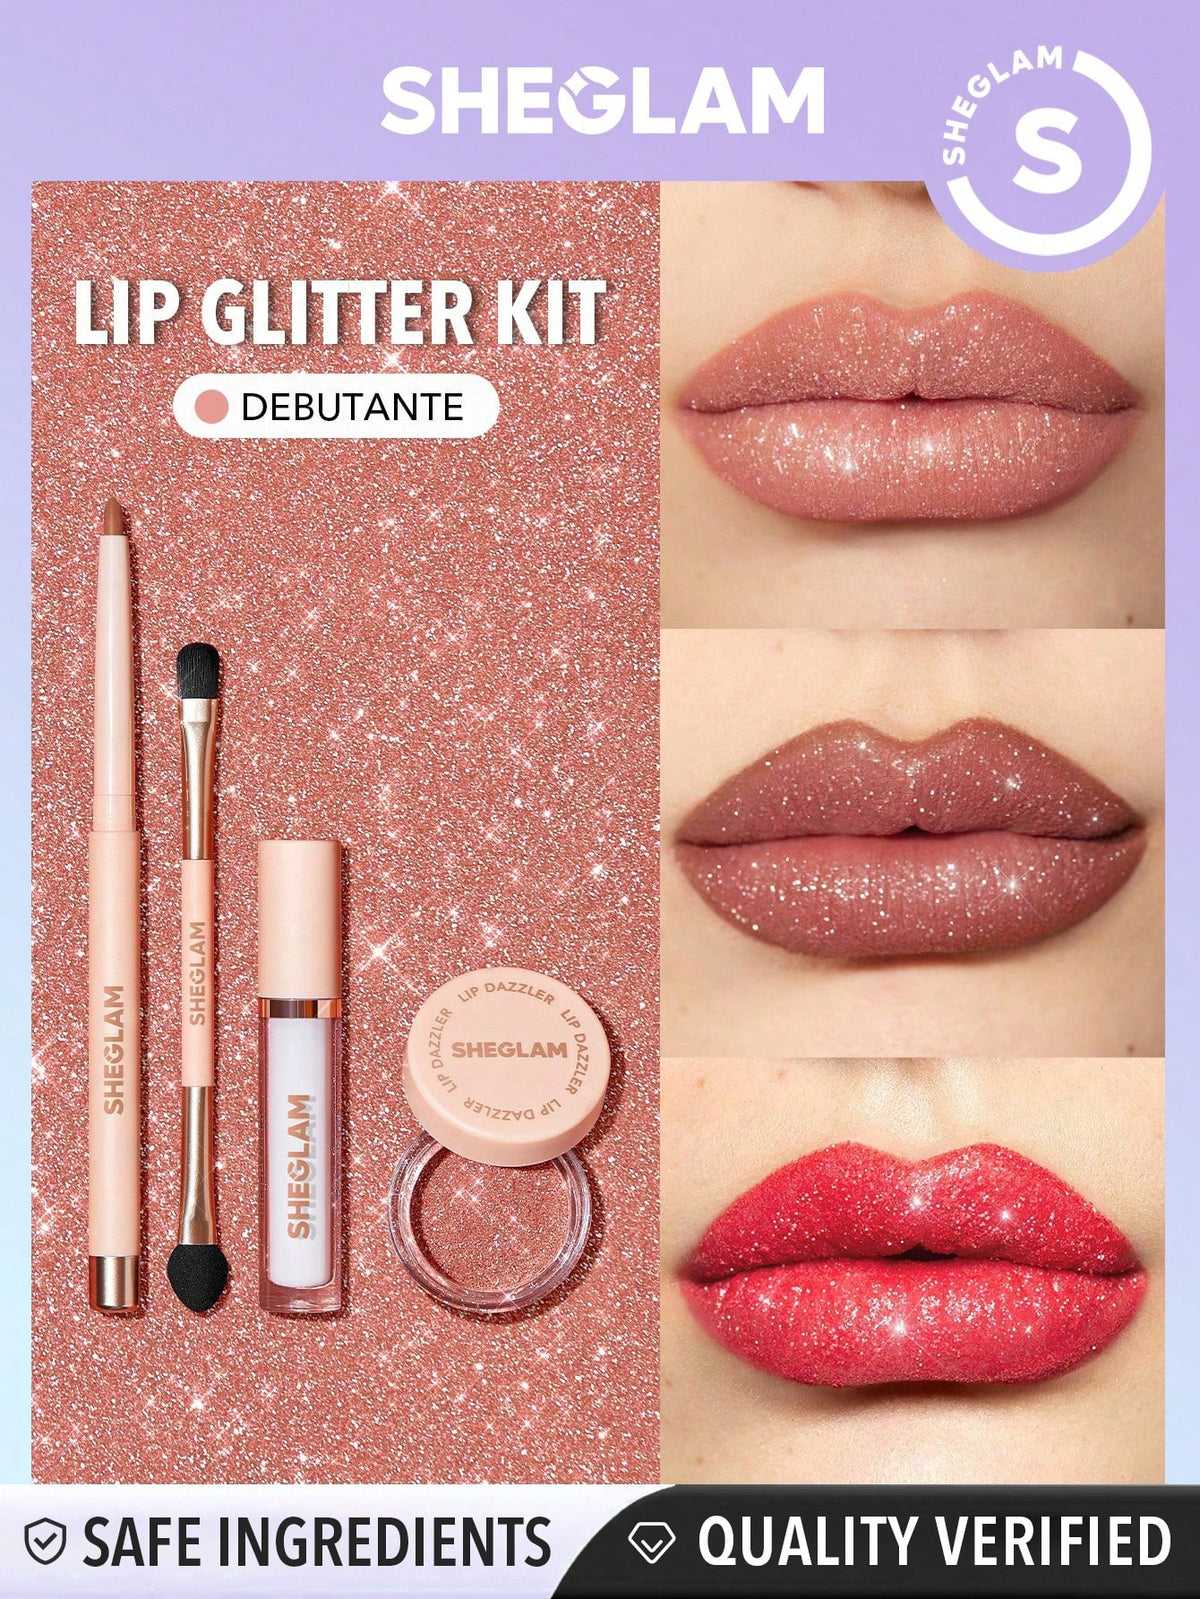 Sparkle and Shine: SHEGLAM Lip Dazzler Glitter Kit - Debutante Edition